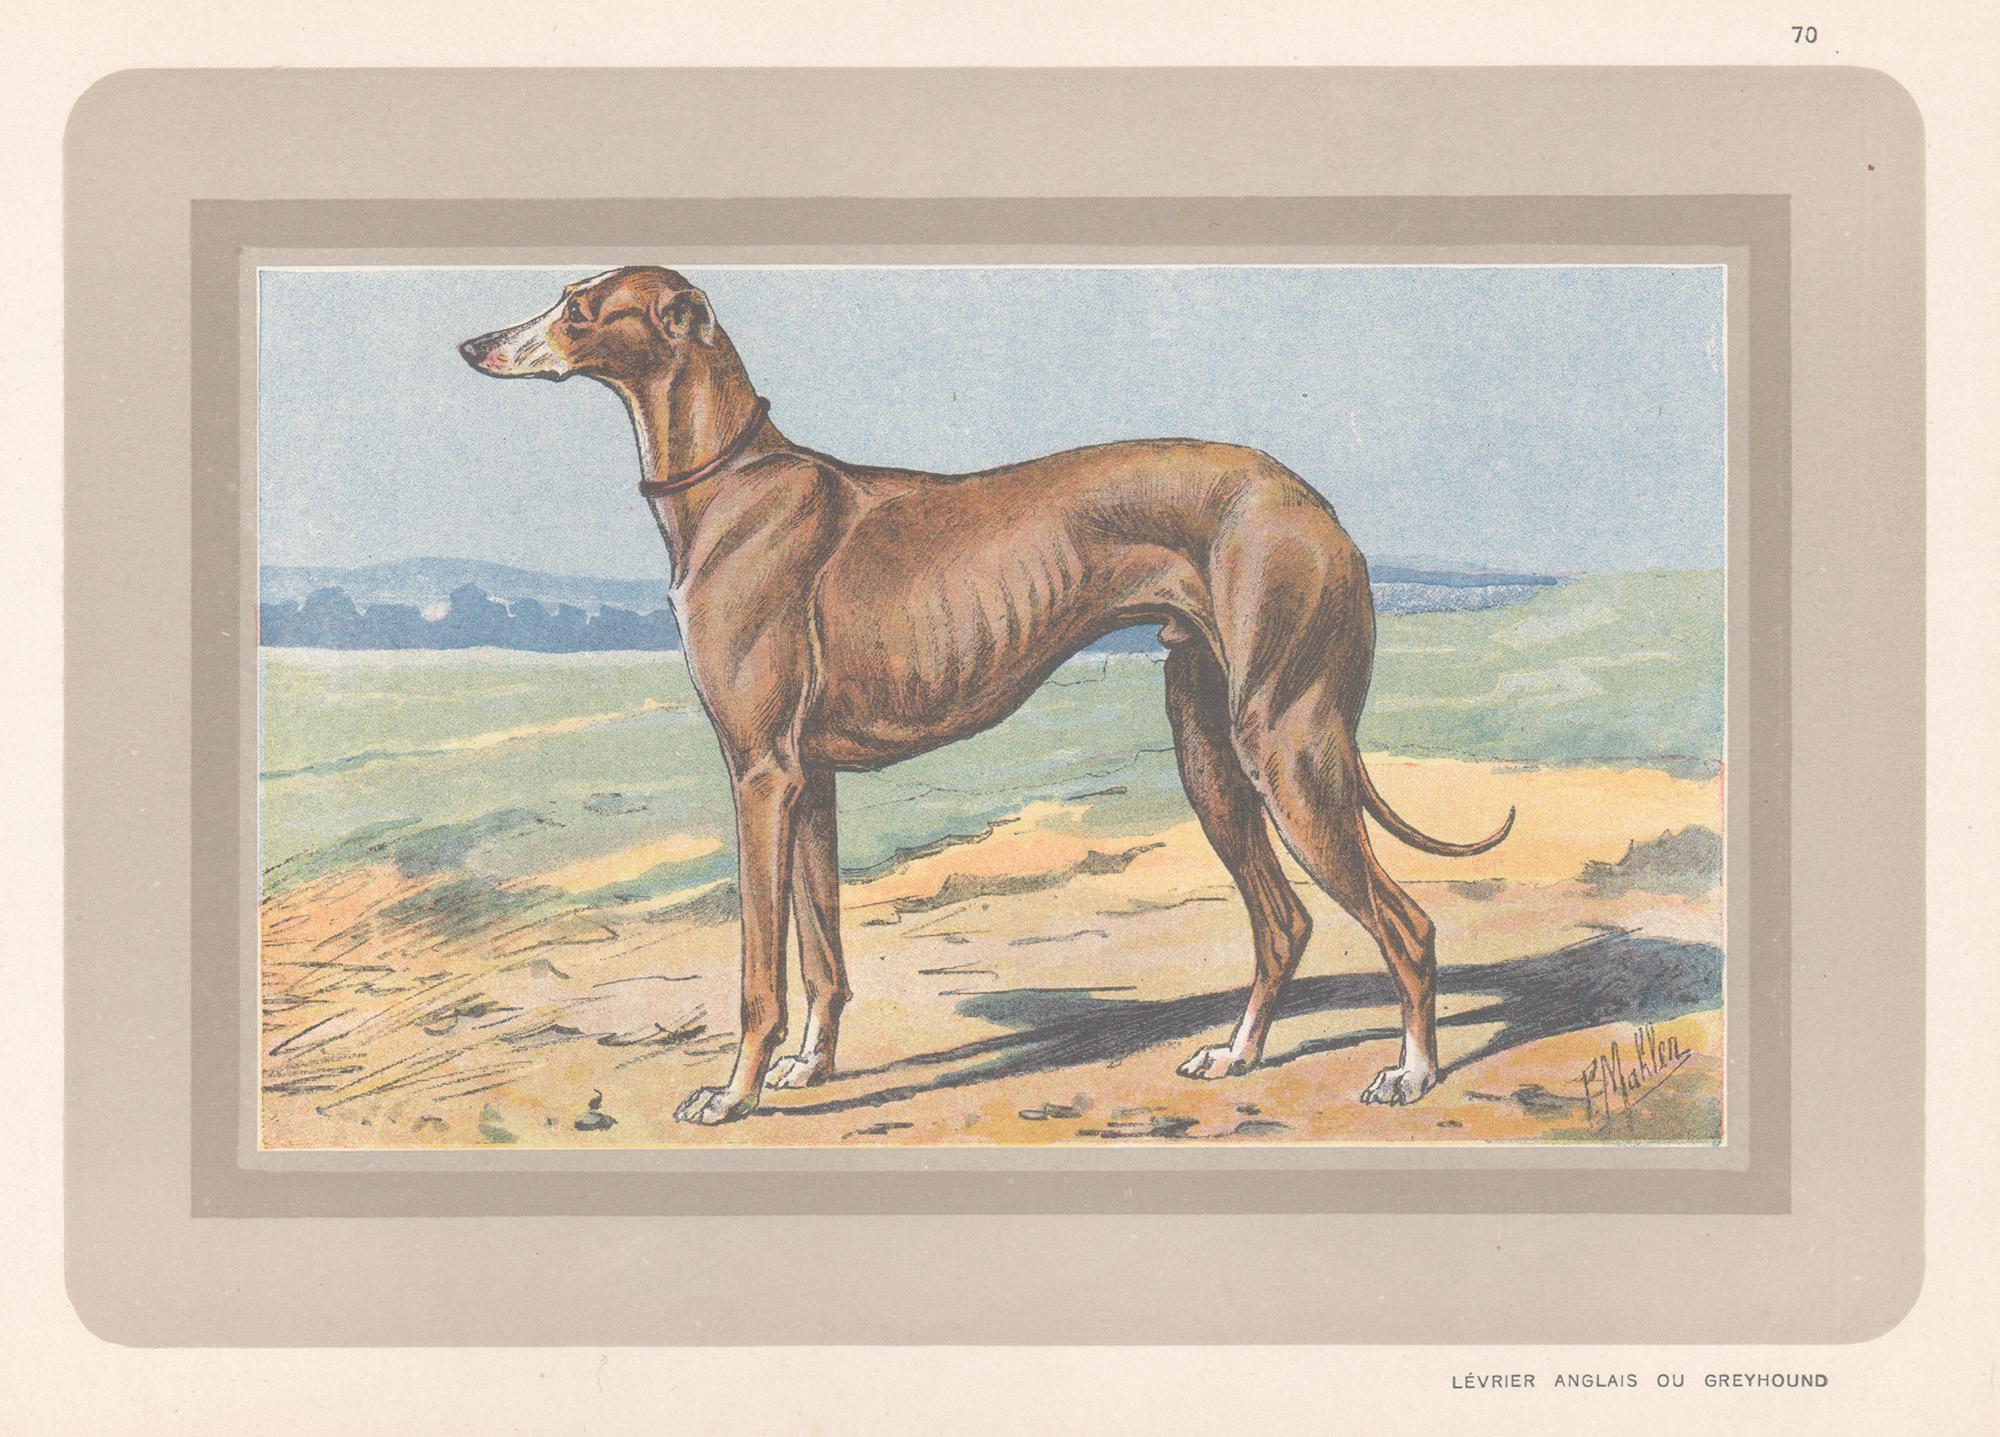 P. Mahler Animal Print - Greyhound, French hound dog chromolithograph print, 1930s